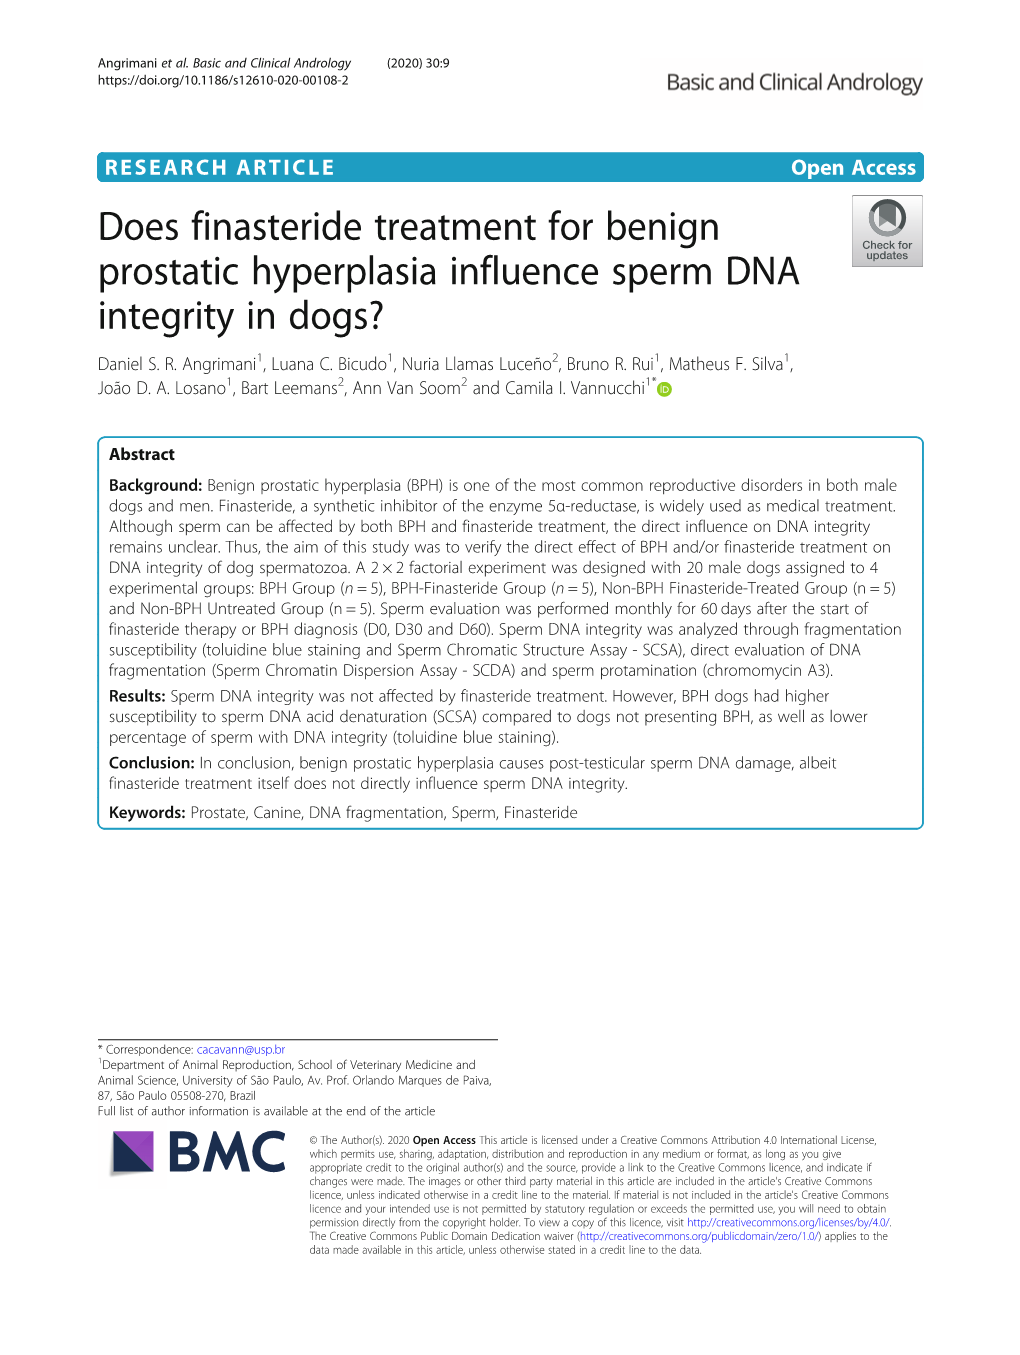 Does Finasteride Treatment for Benign Prostatic Hyperplasia Influence Sperm DNA Integrity in Dogs? Daniel S